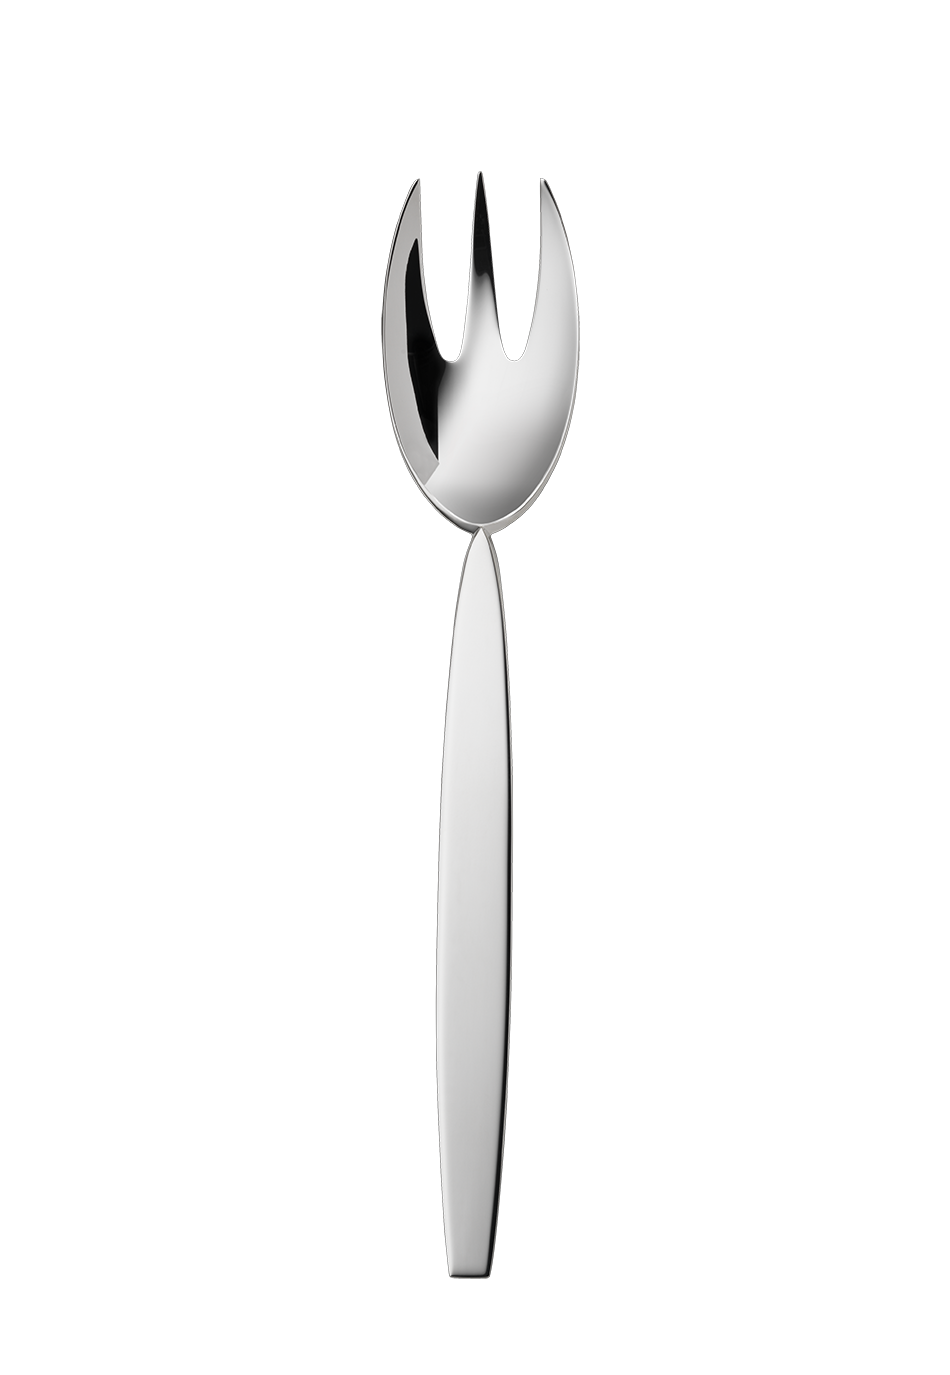 12" Vegetable Fork (150g massive silverplated)